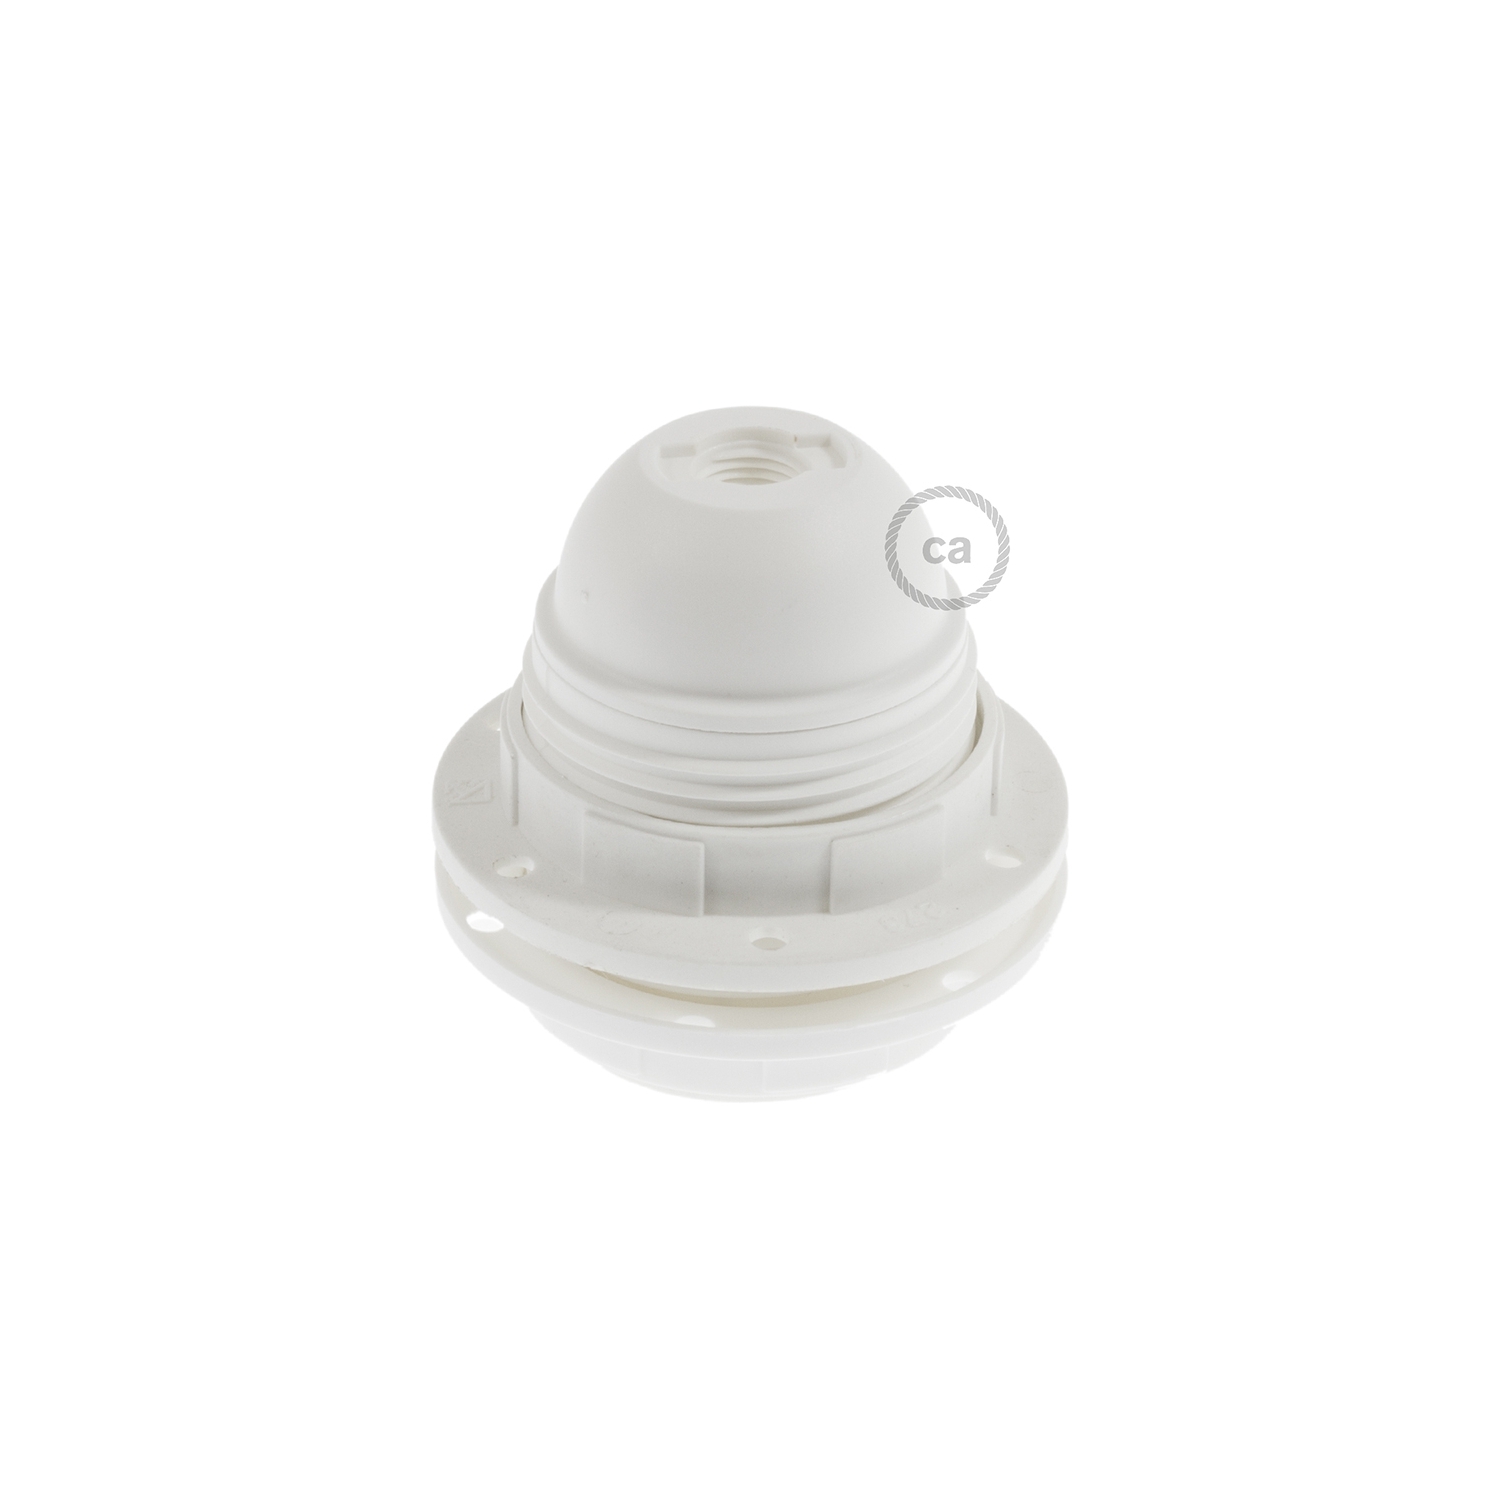 Double Ferrule Thermoplastic light bulb socket - E26